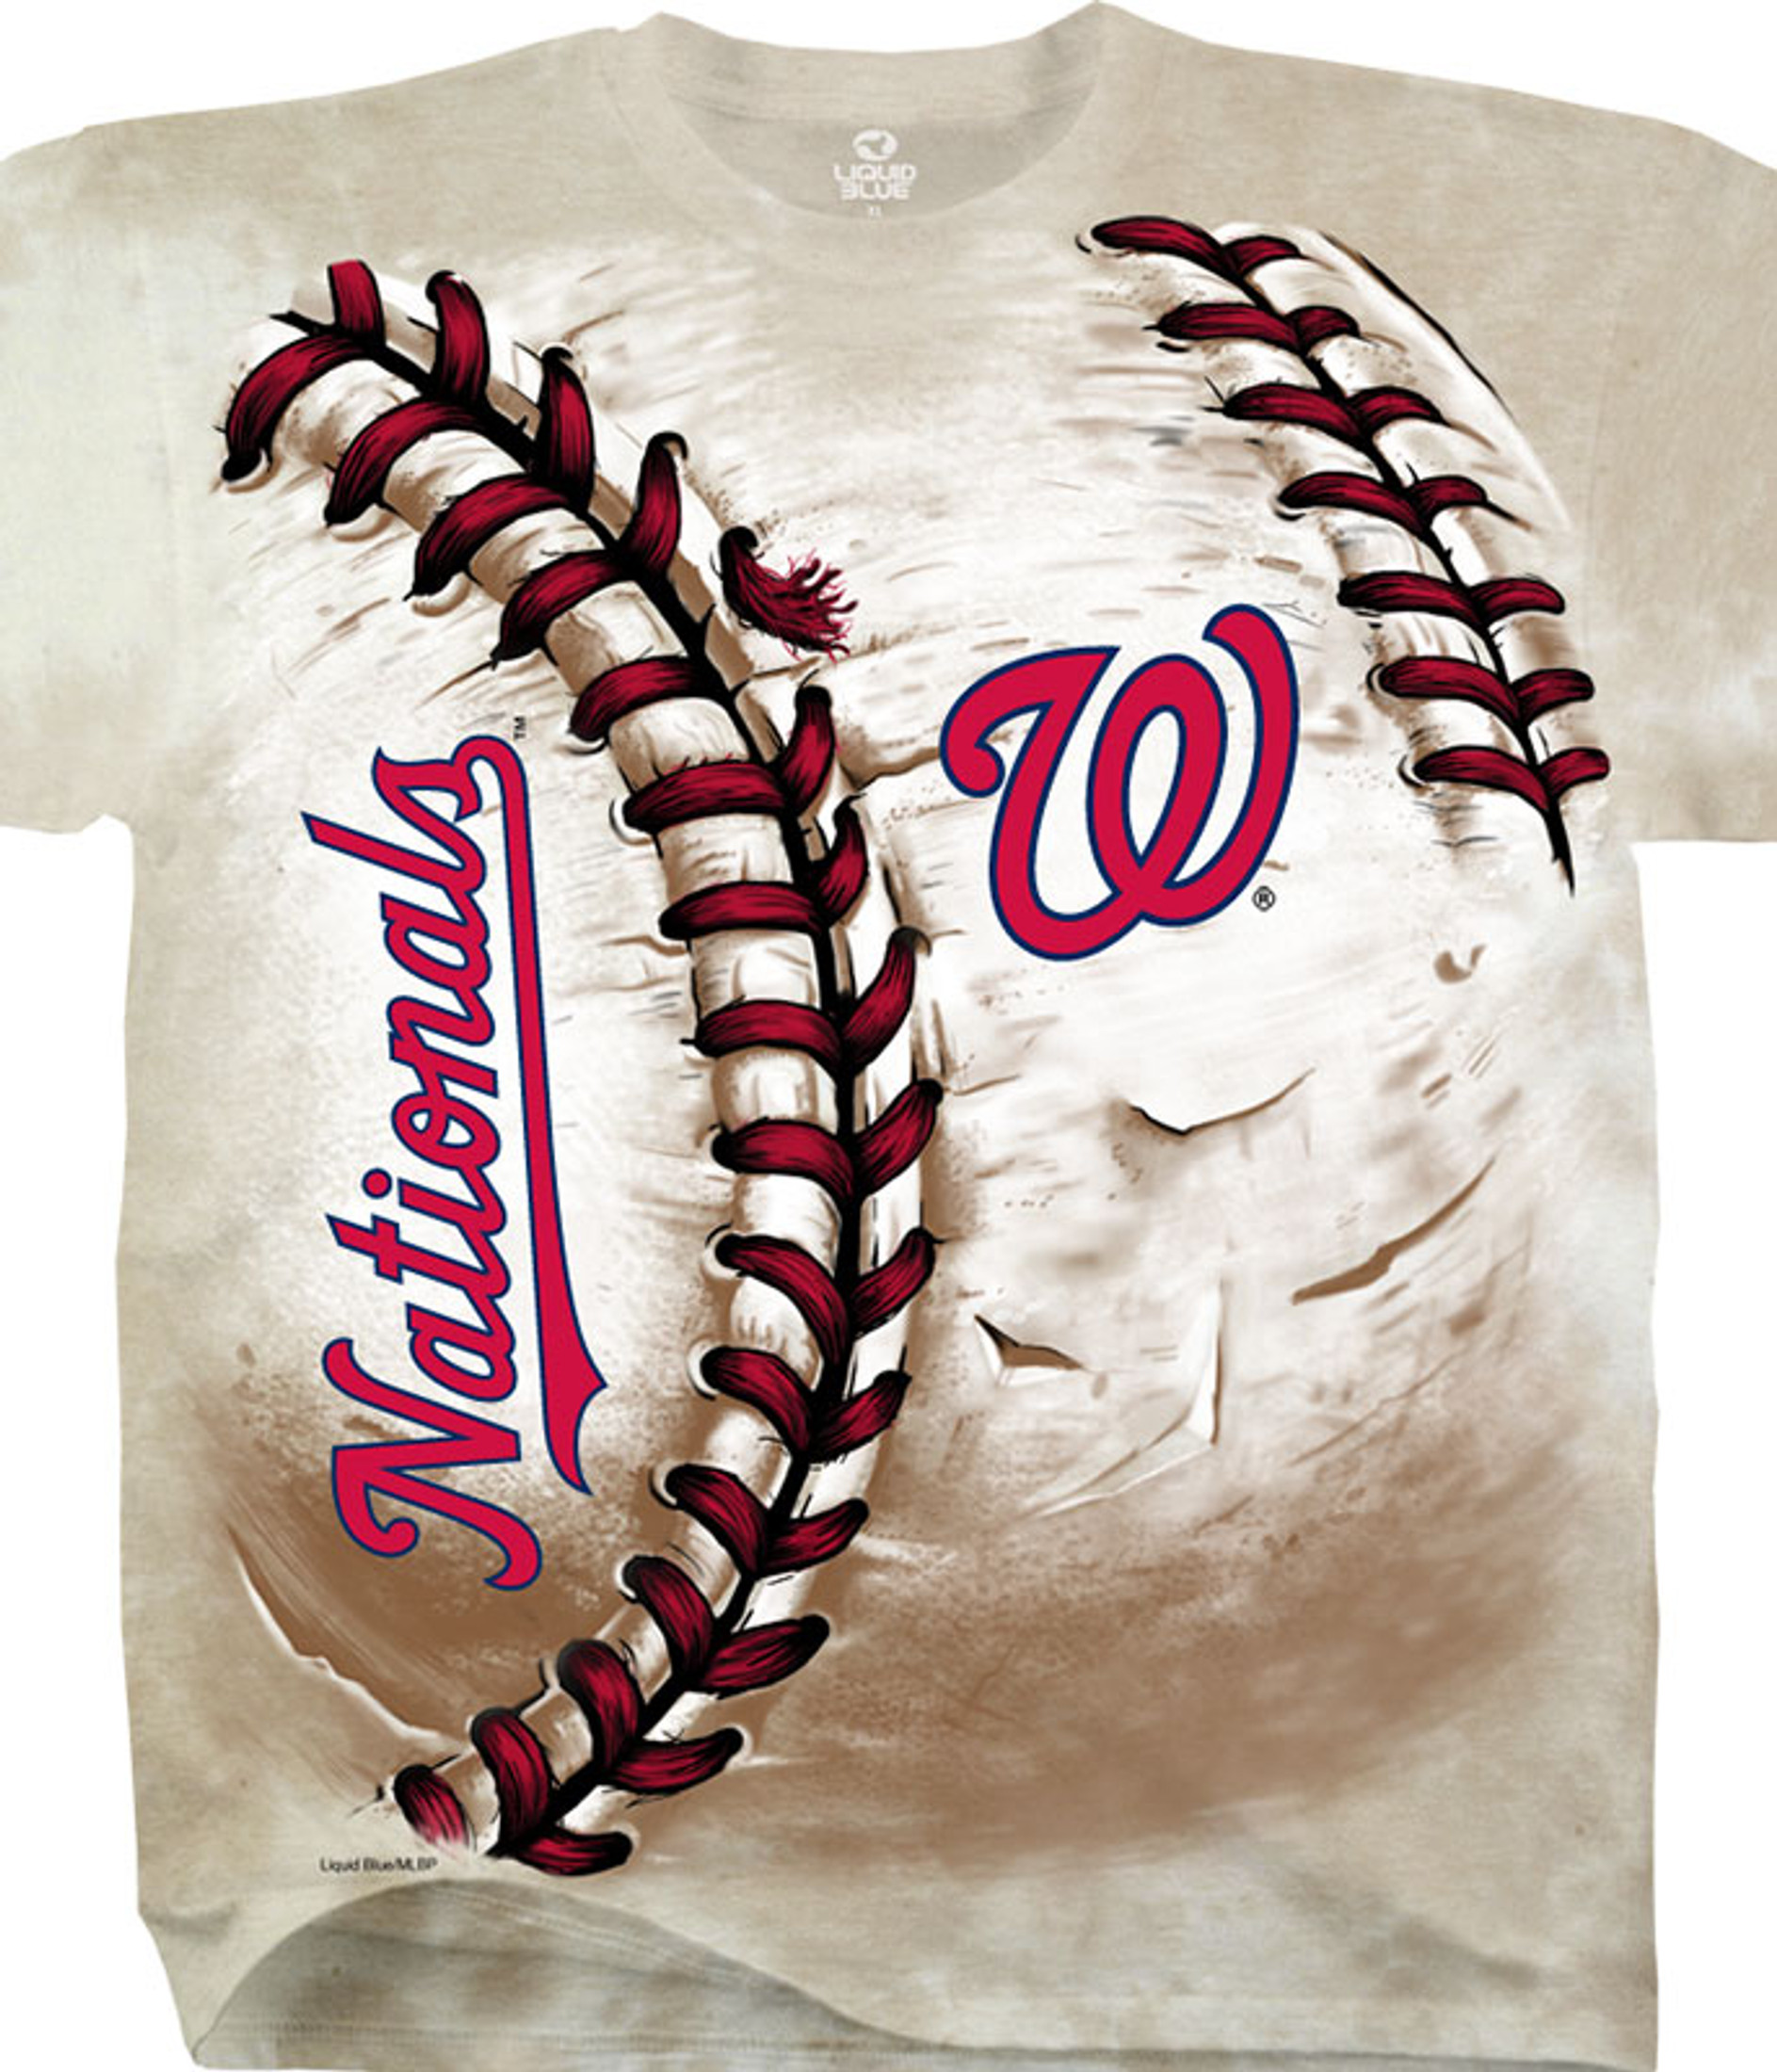 Size S Washington Nationals MLB Jerseys for sale